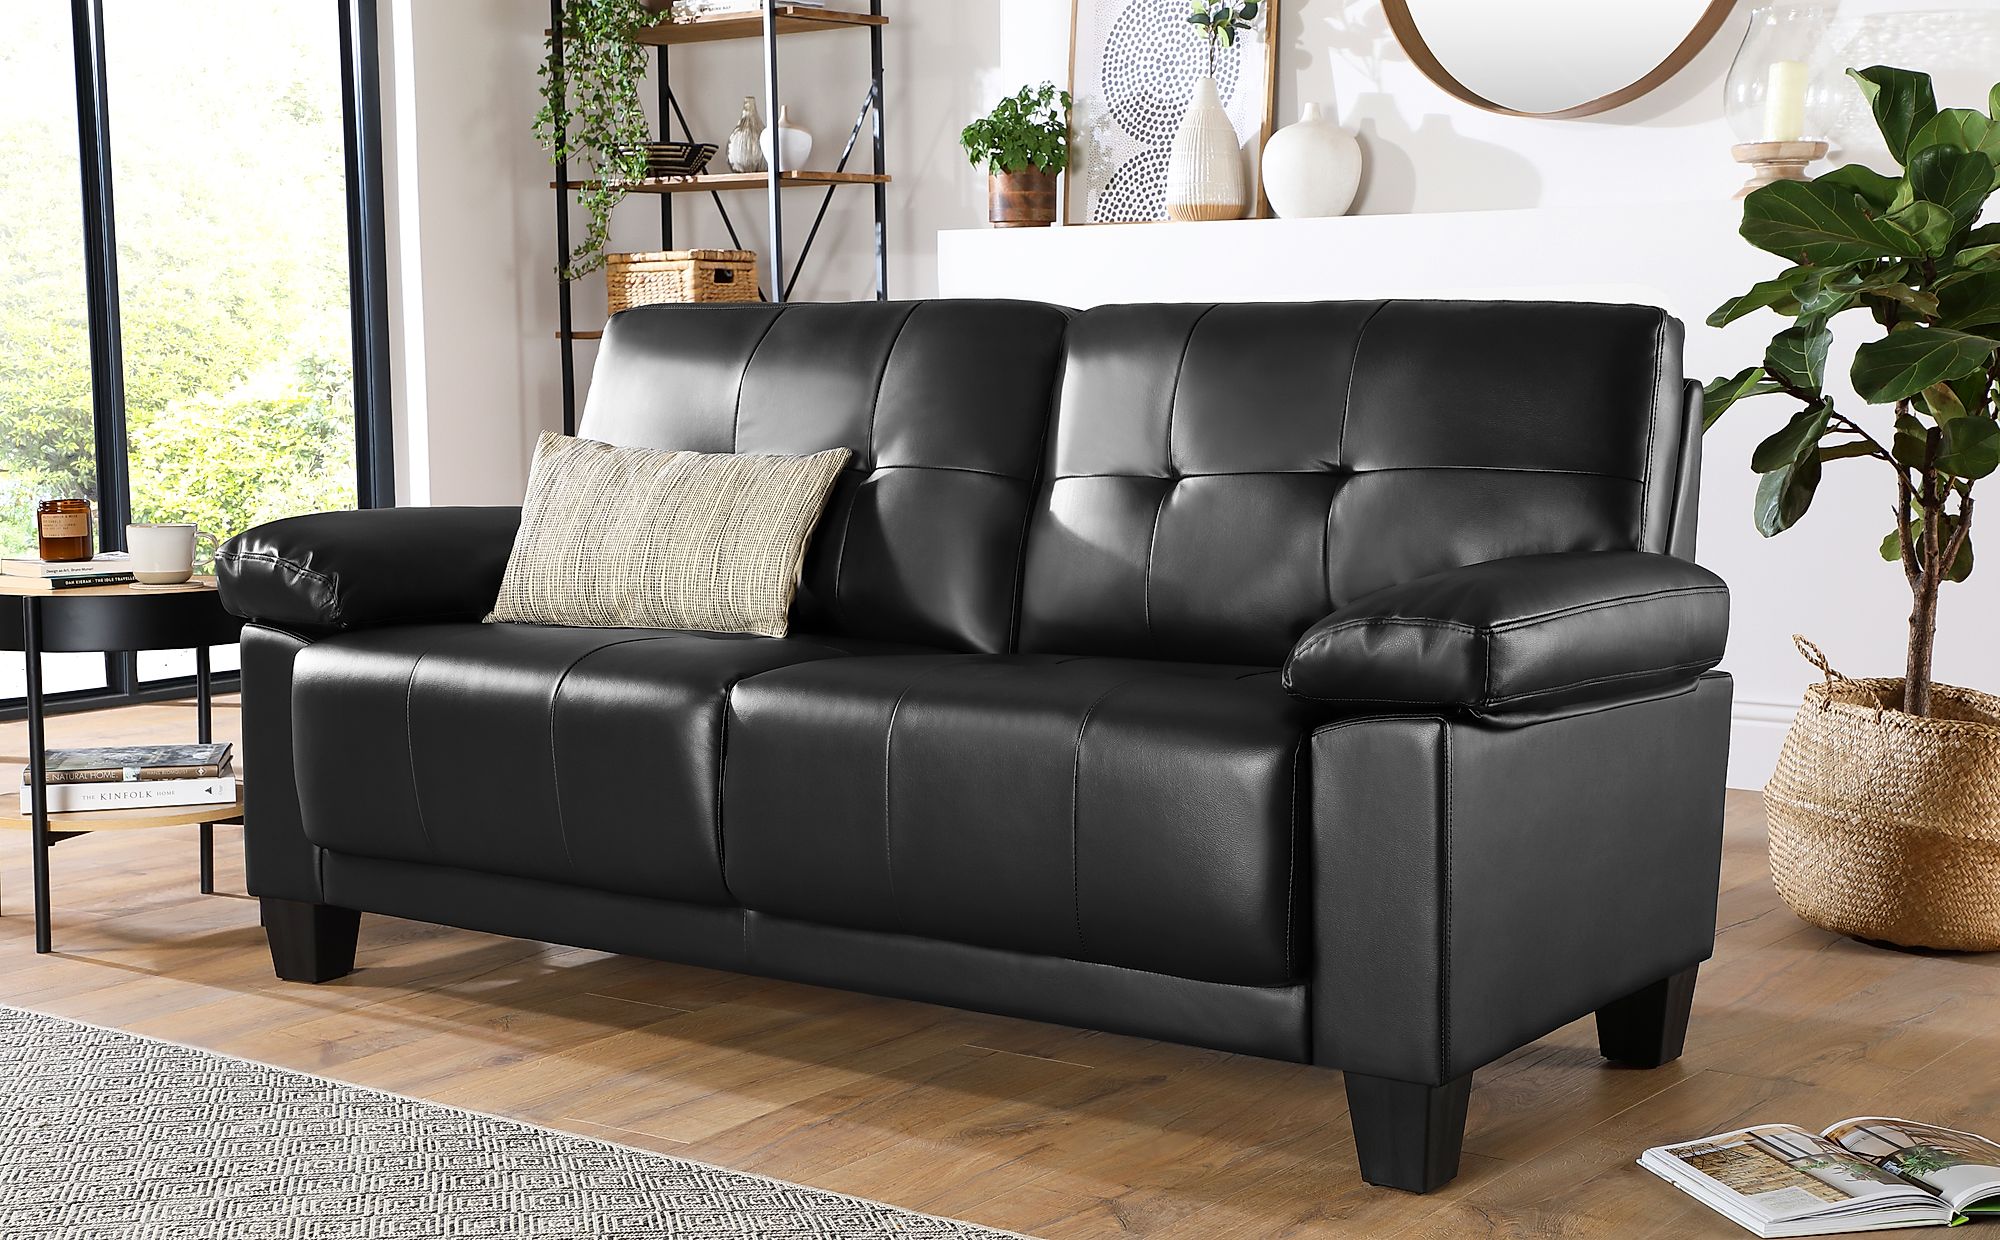 Linton Small Black Leather 3 Seater Sofa Furniture Choice